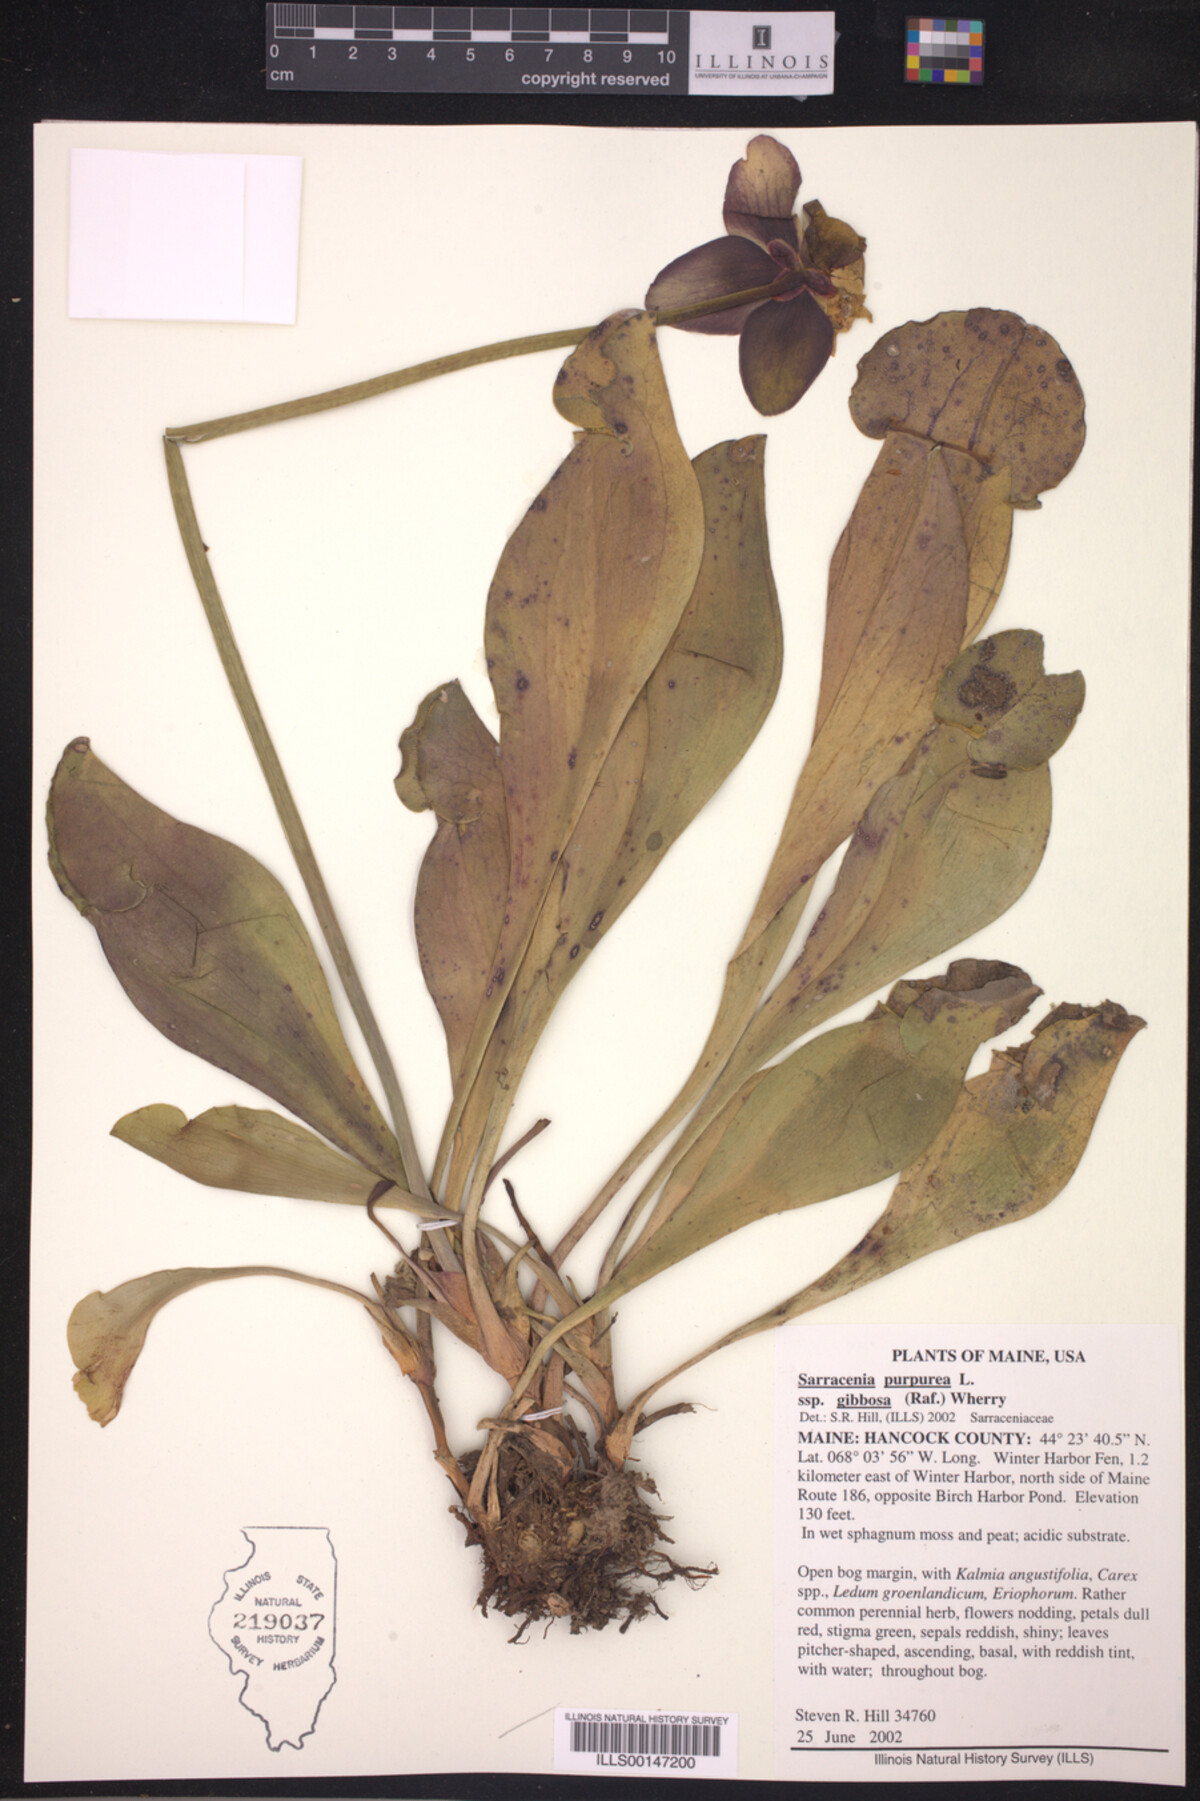 Sarracenia purpurea ssp. gibbosa image